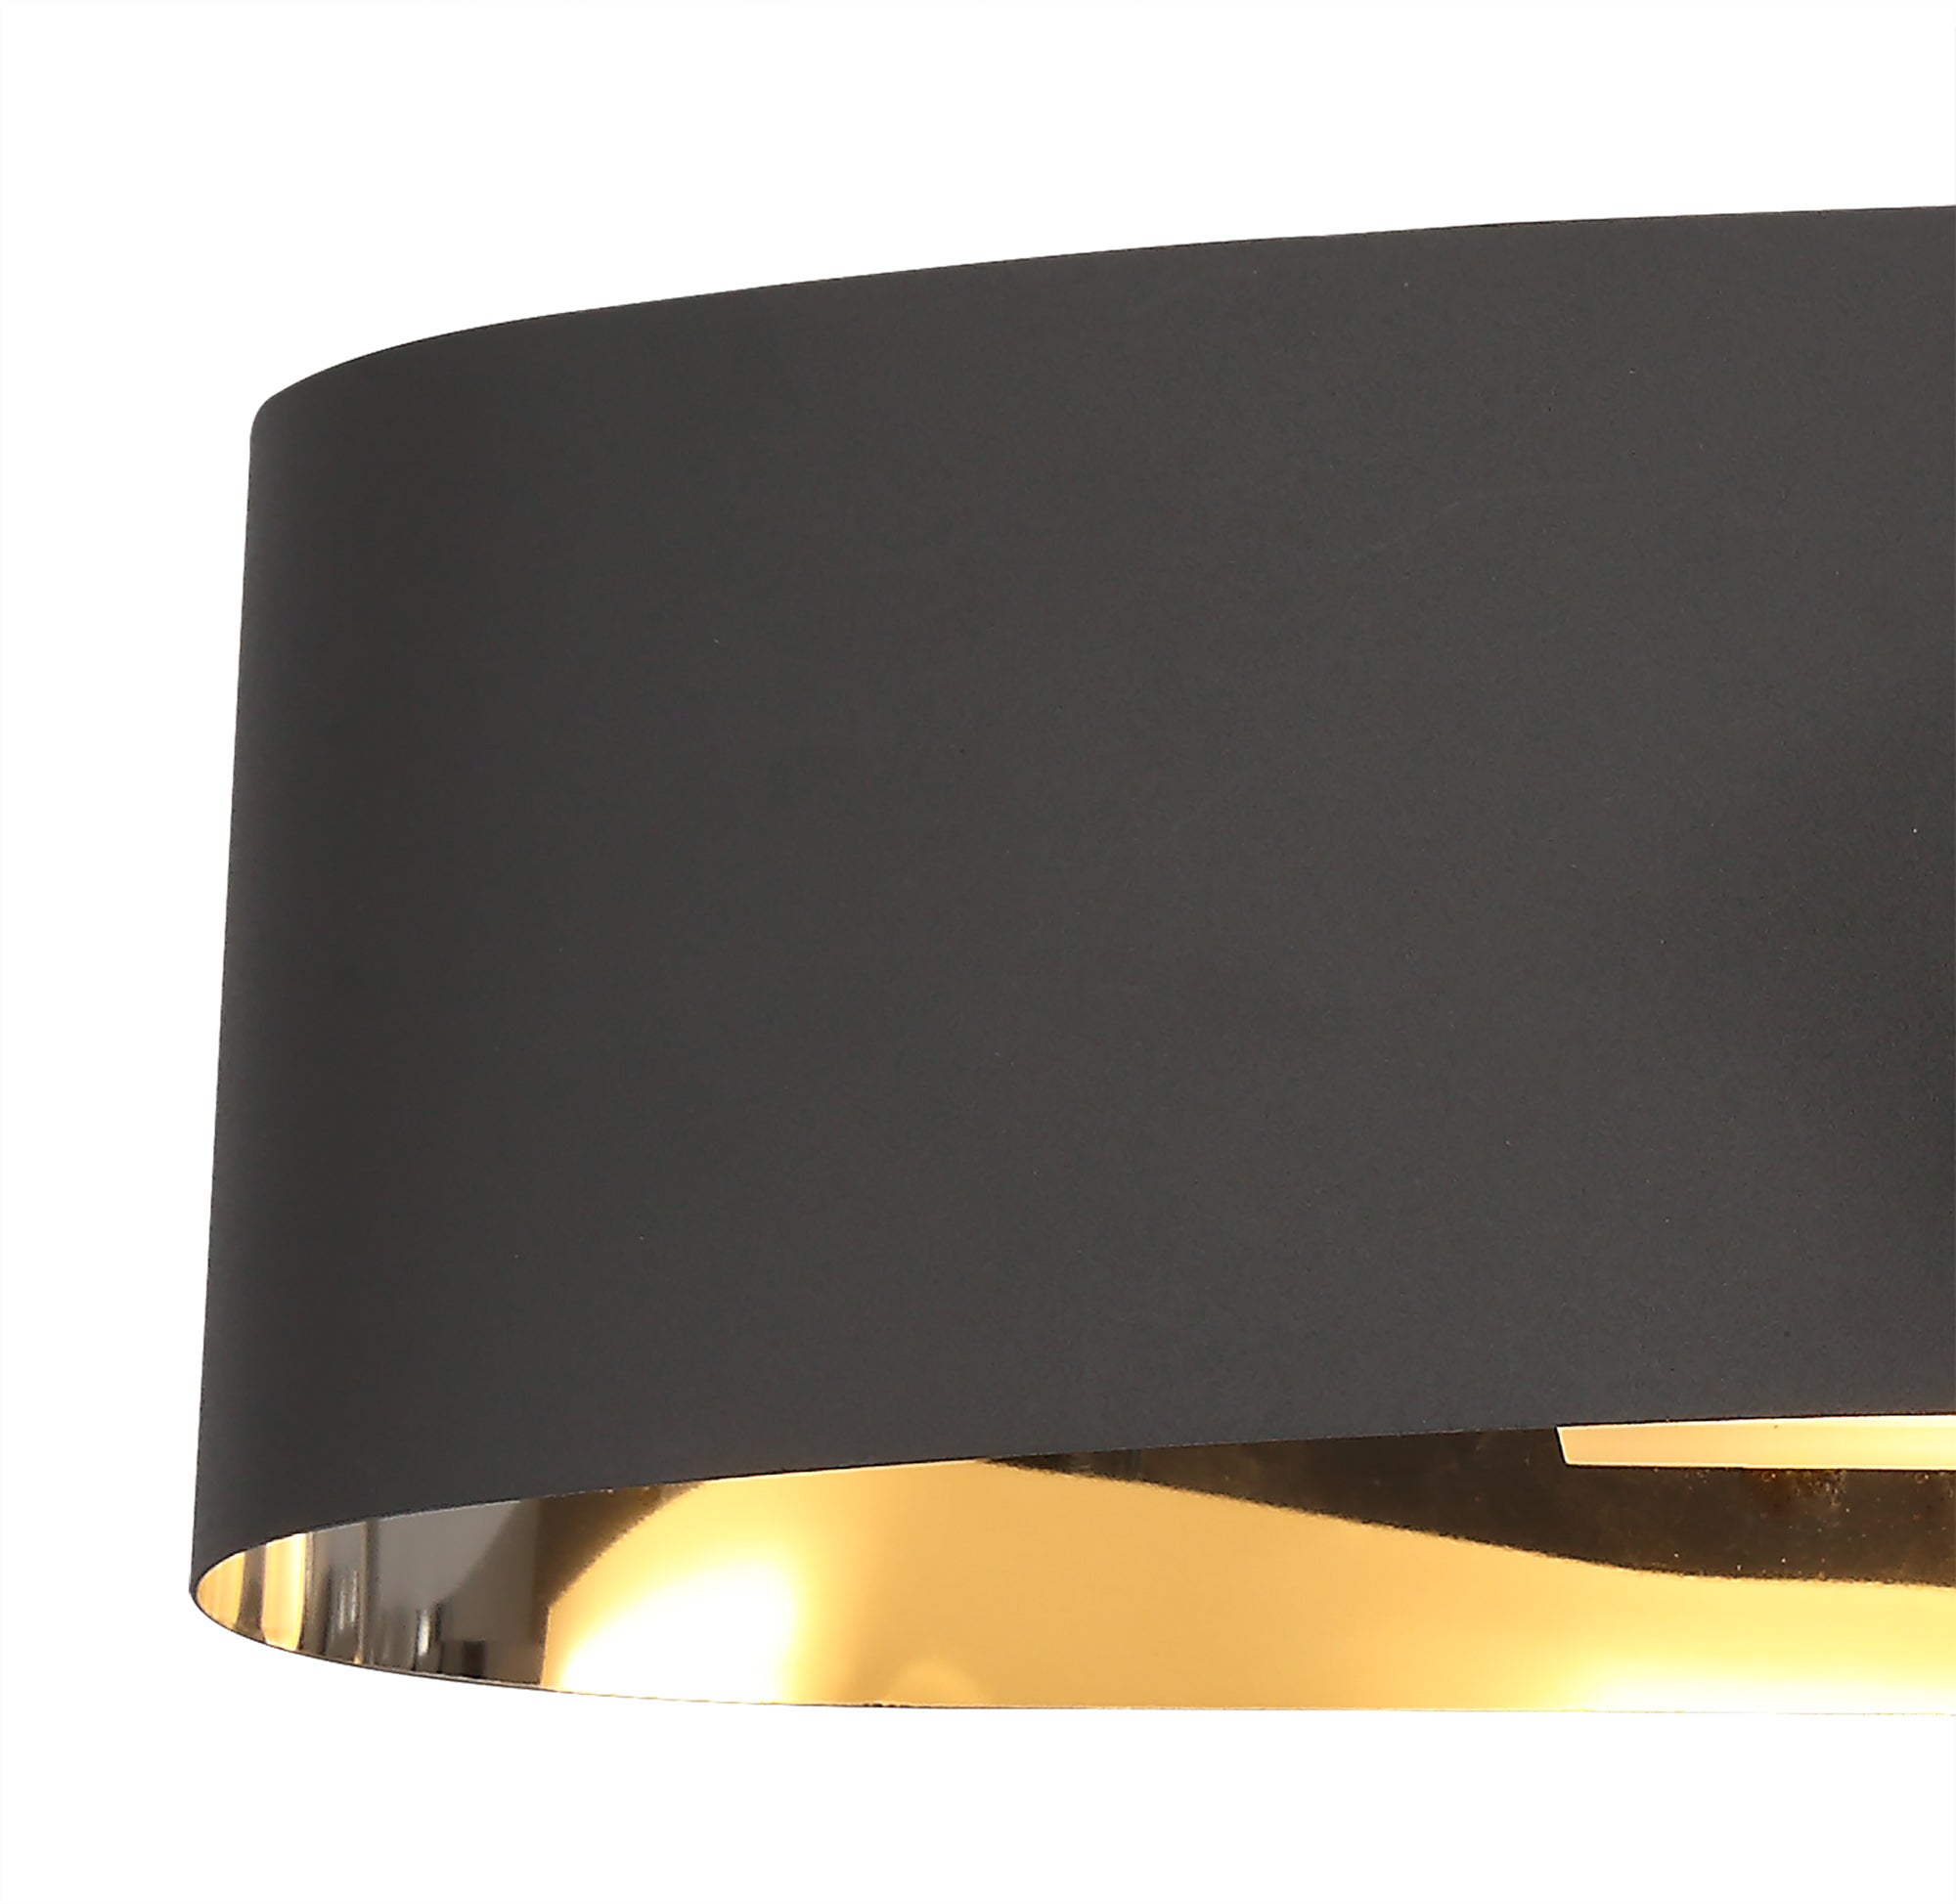 Elma Wall Lamp, 1 x 10W LED, 3000K, 700lm, Sand Anthracite/Polished Chrome, 3yrs Warranty LO173693